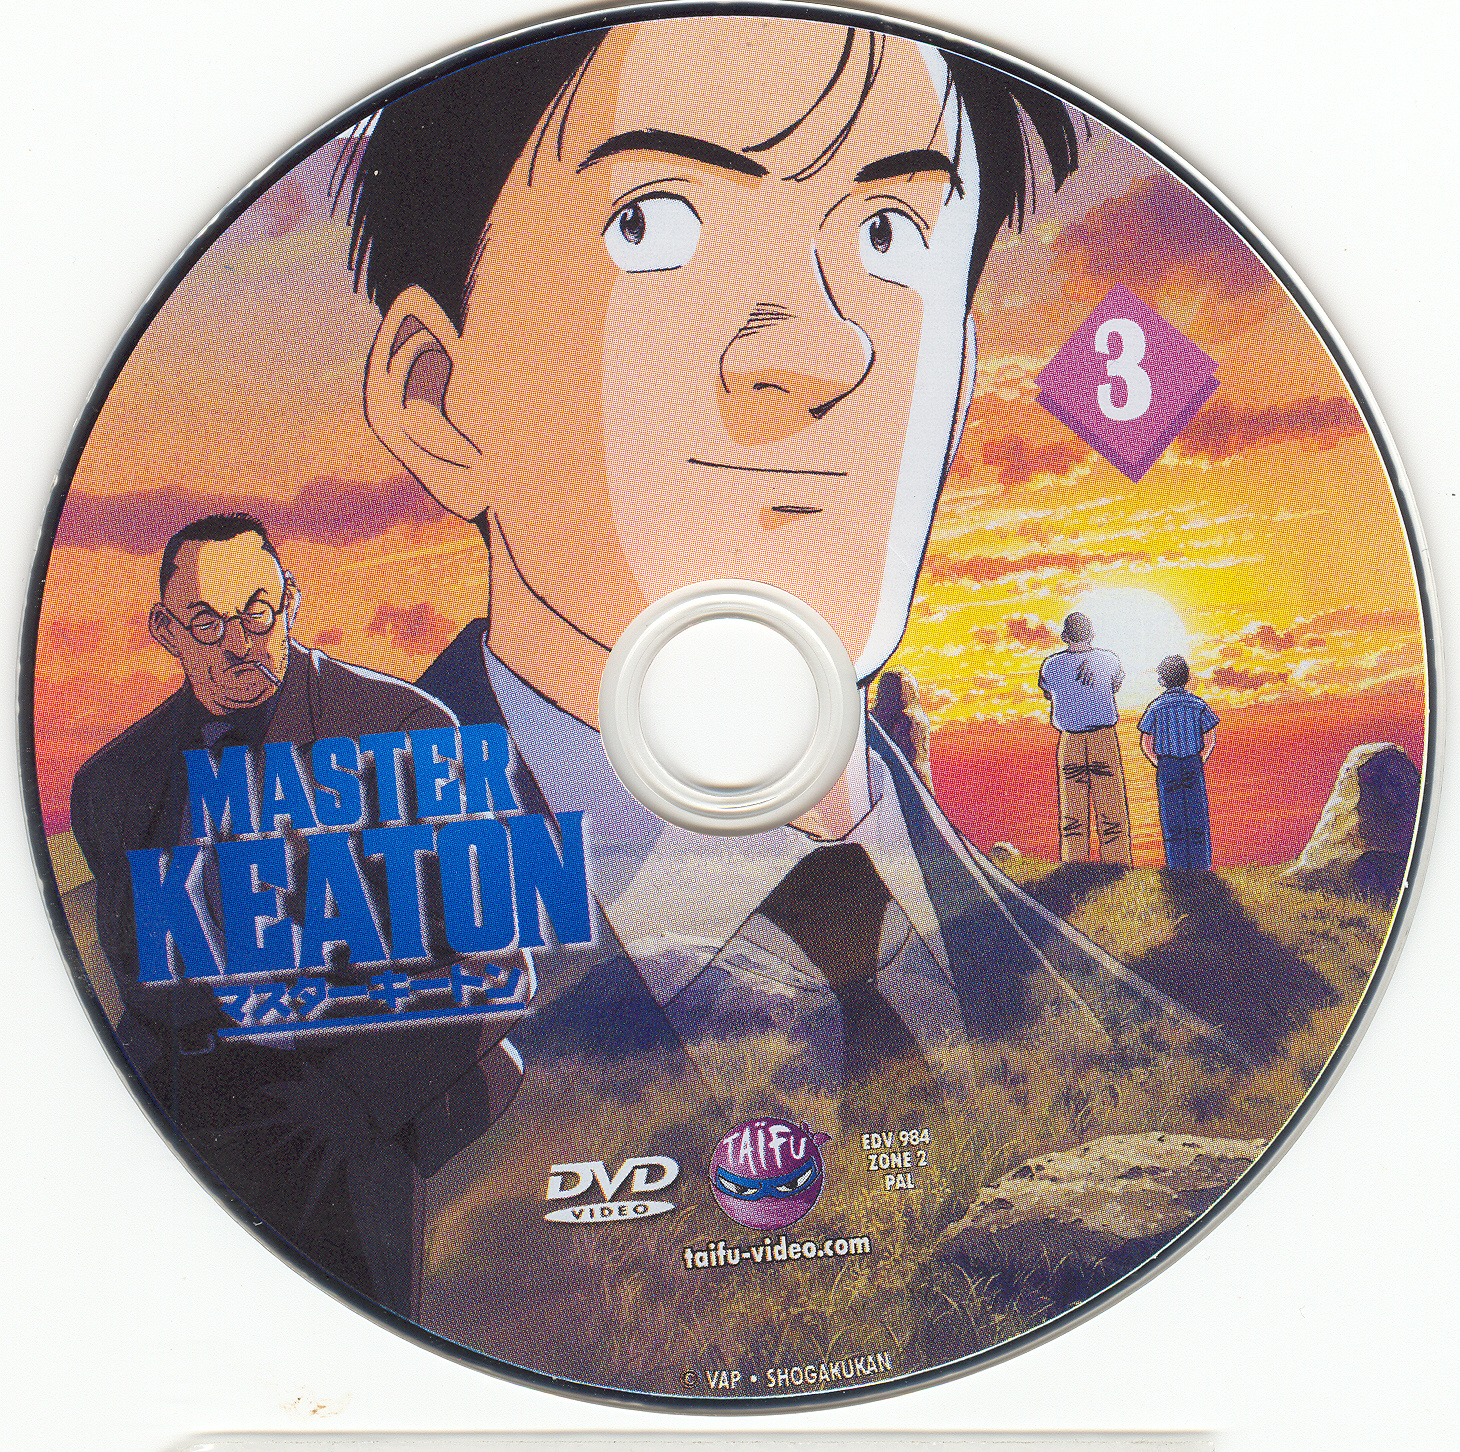 Master Keaton vol 03